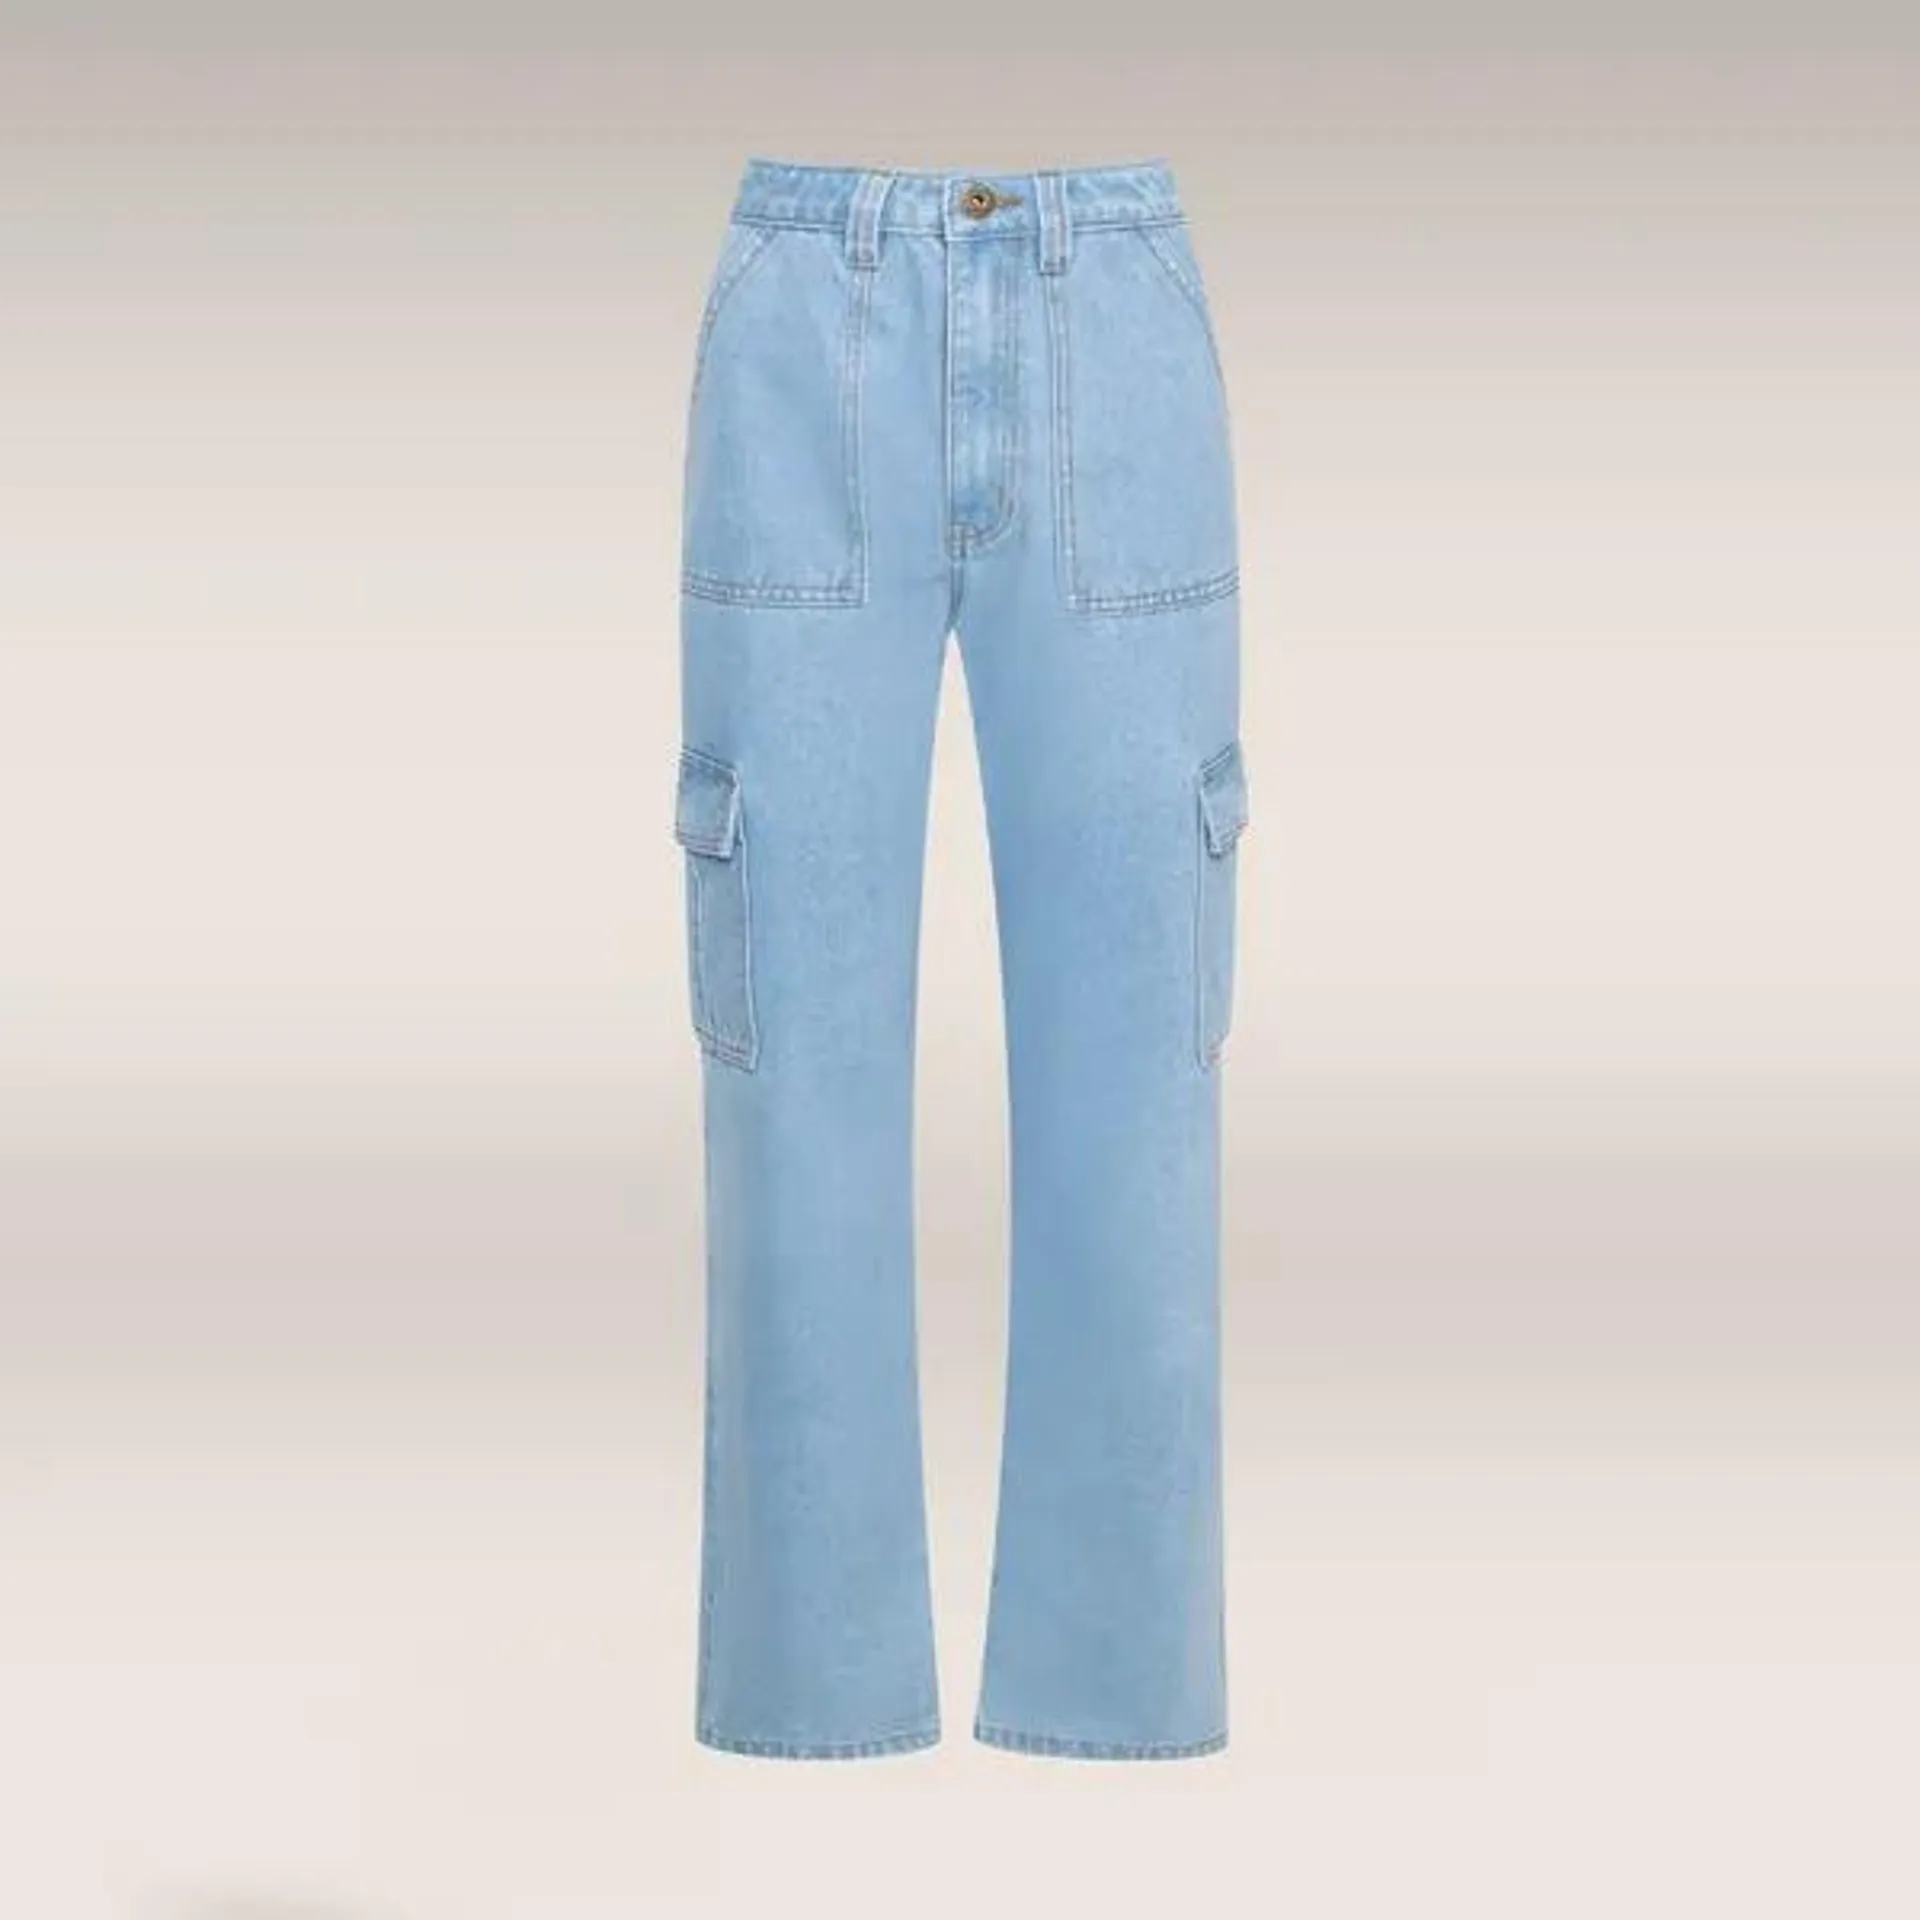 Utility wide leg denim jeans light blue